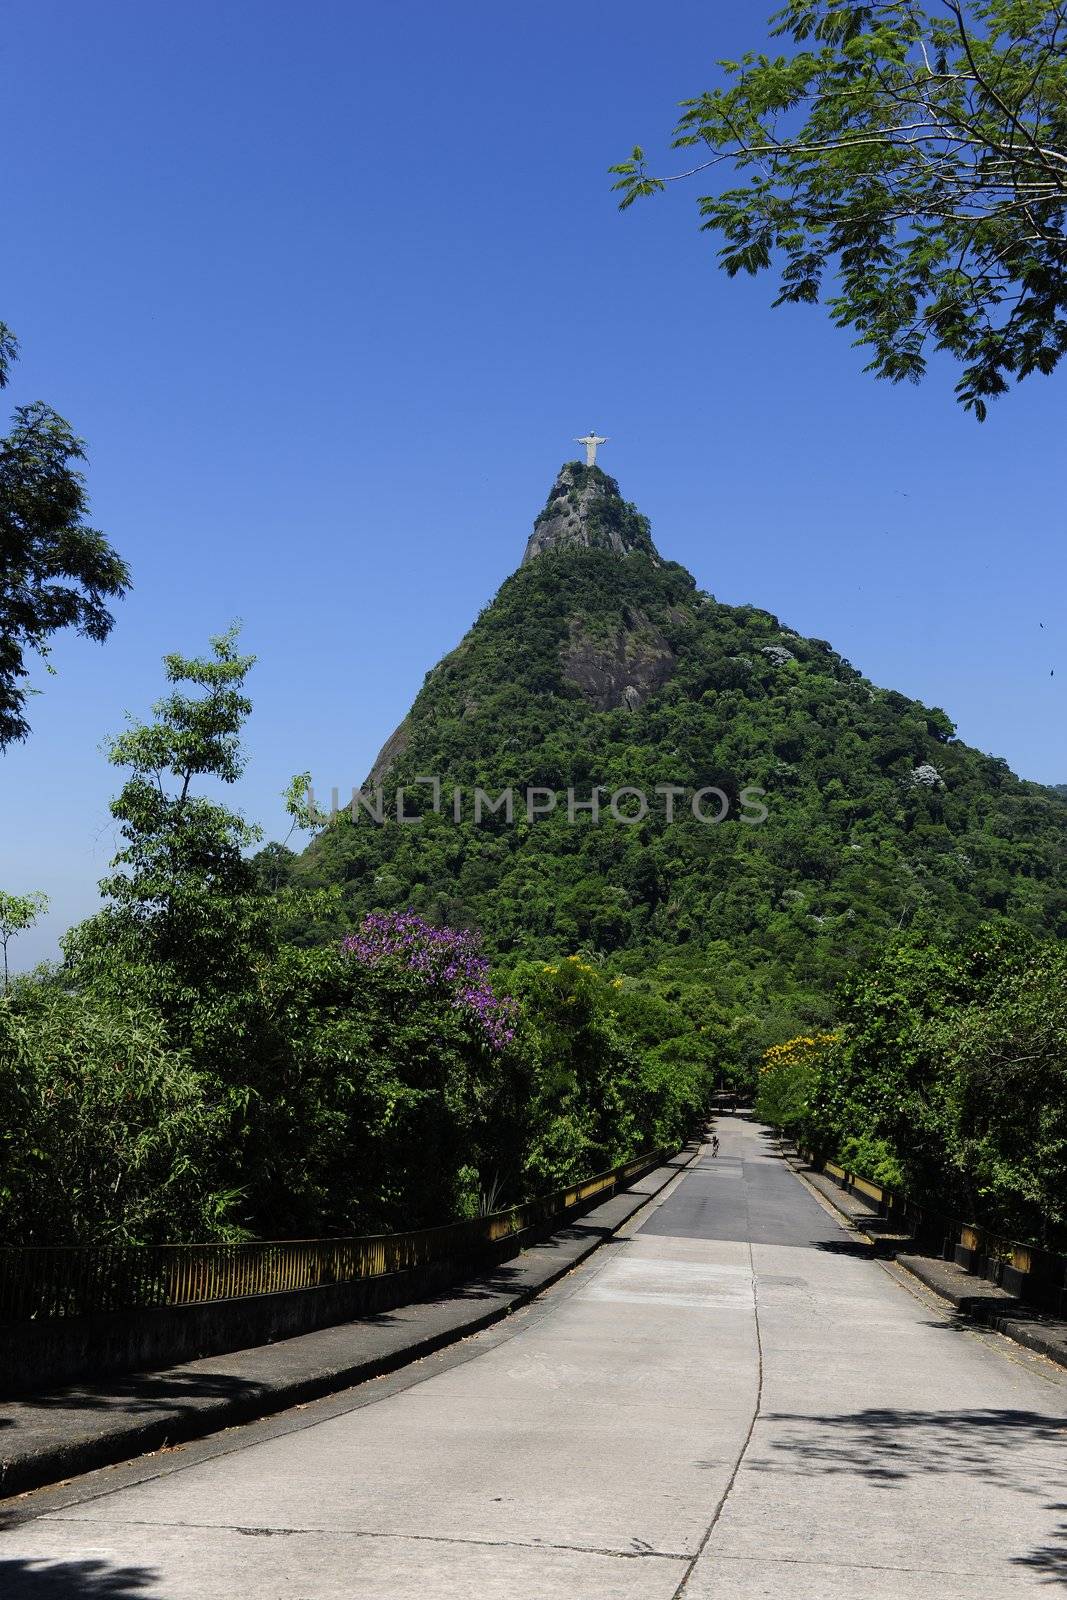 Corcovado Mountain with Christ Redeemer Statue, Rio de Janeiro by mangostock